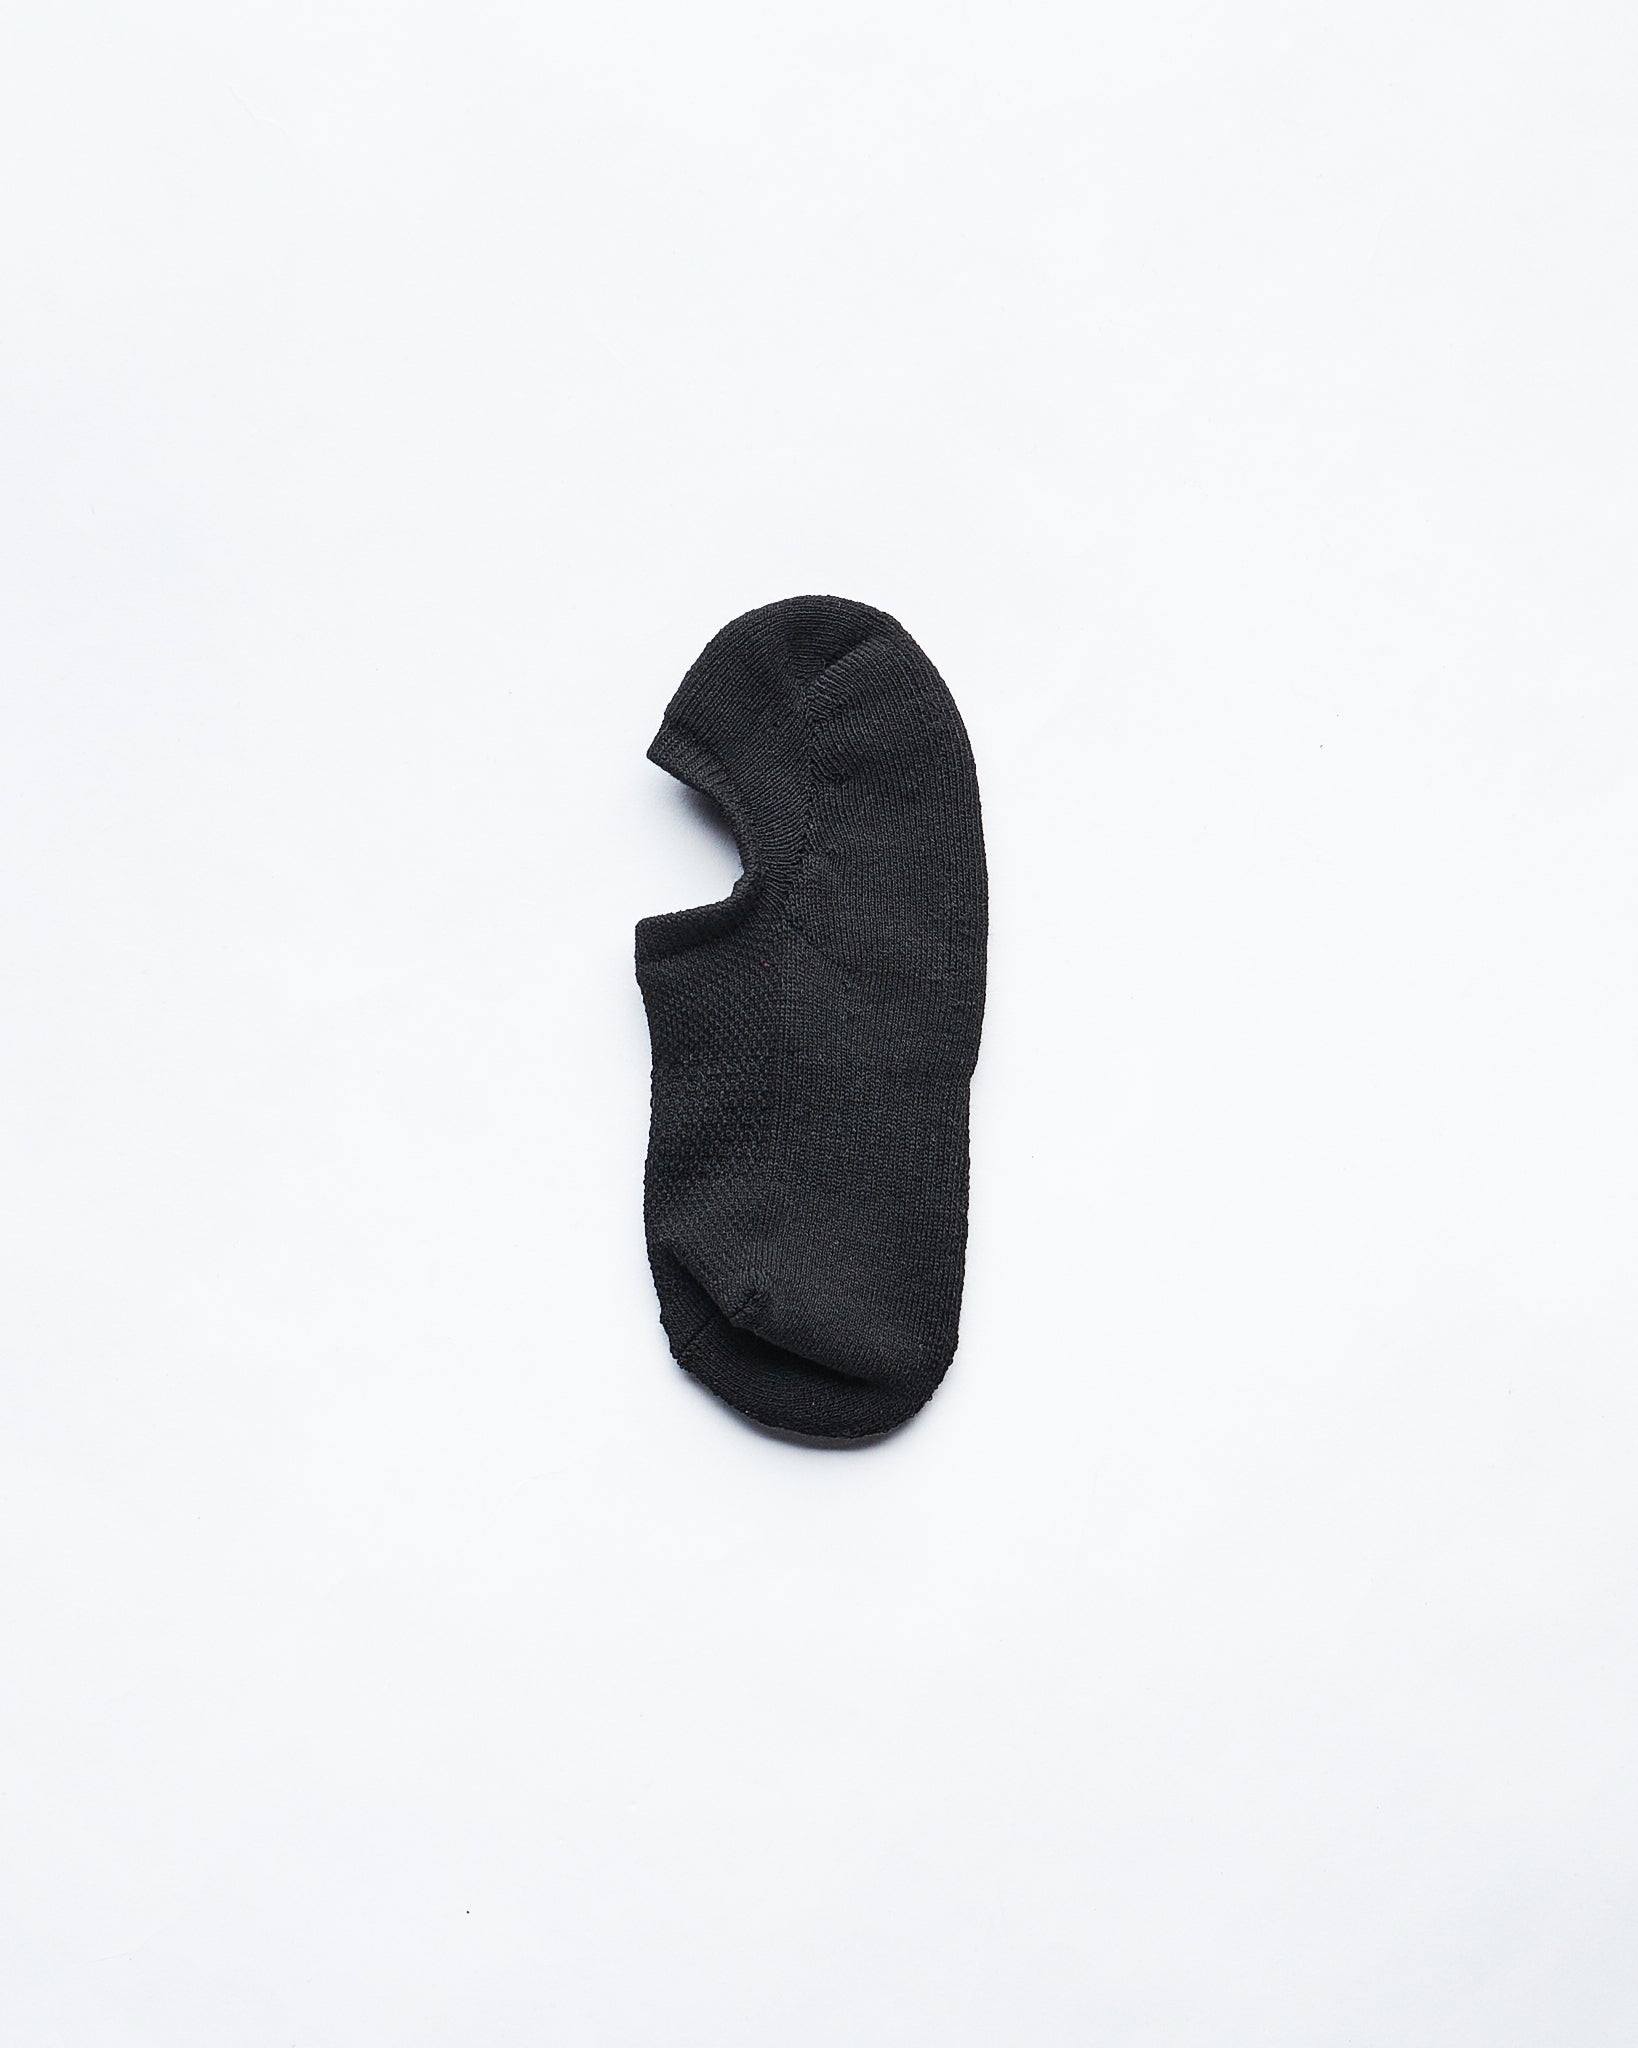 MOI OUTFIT-Plain Color Low Cut 1 Pairs Socks 2.10